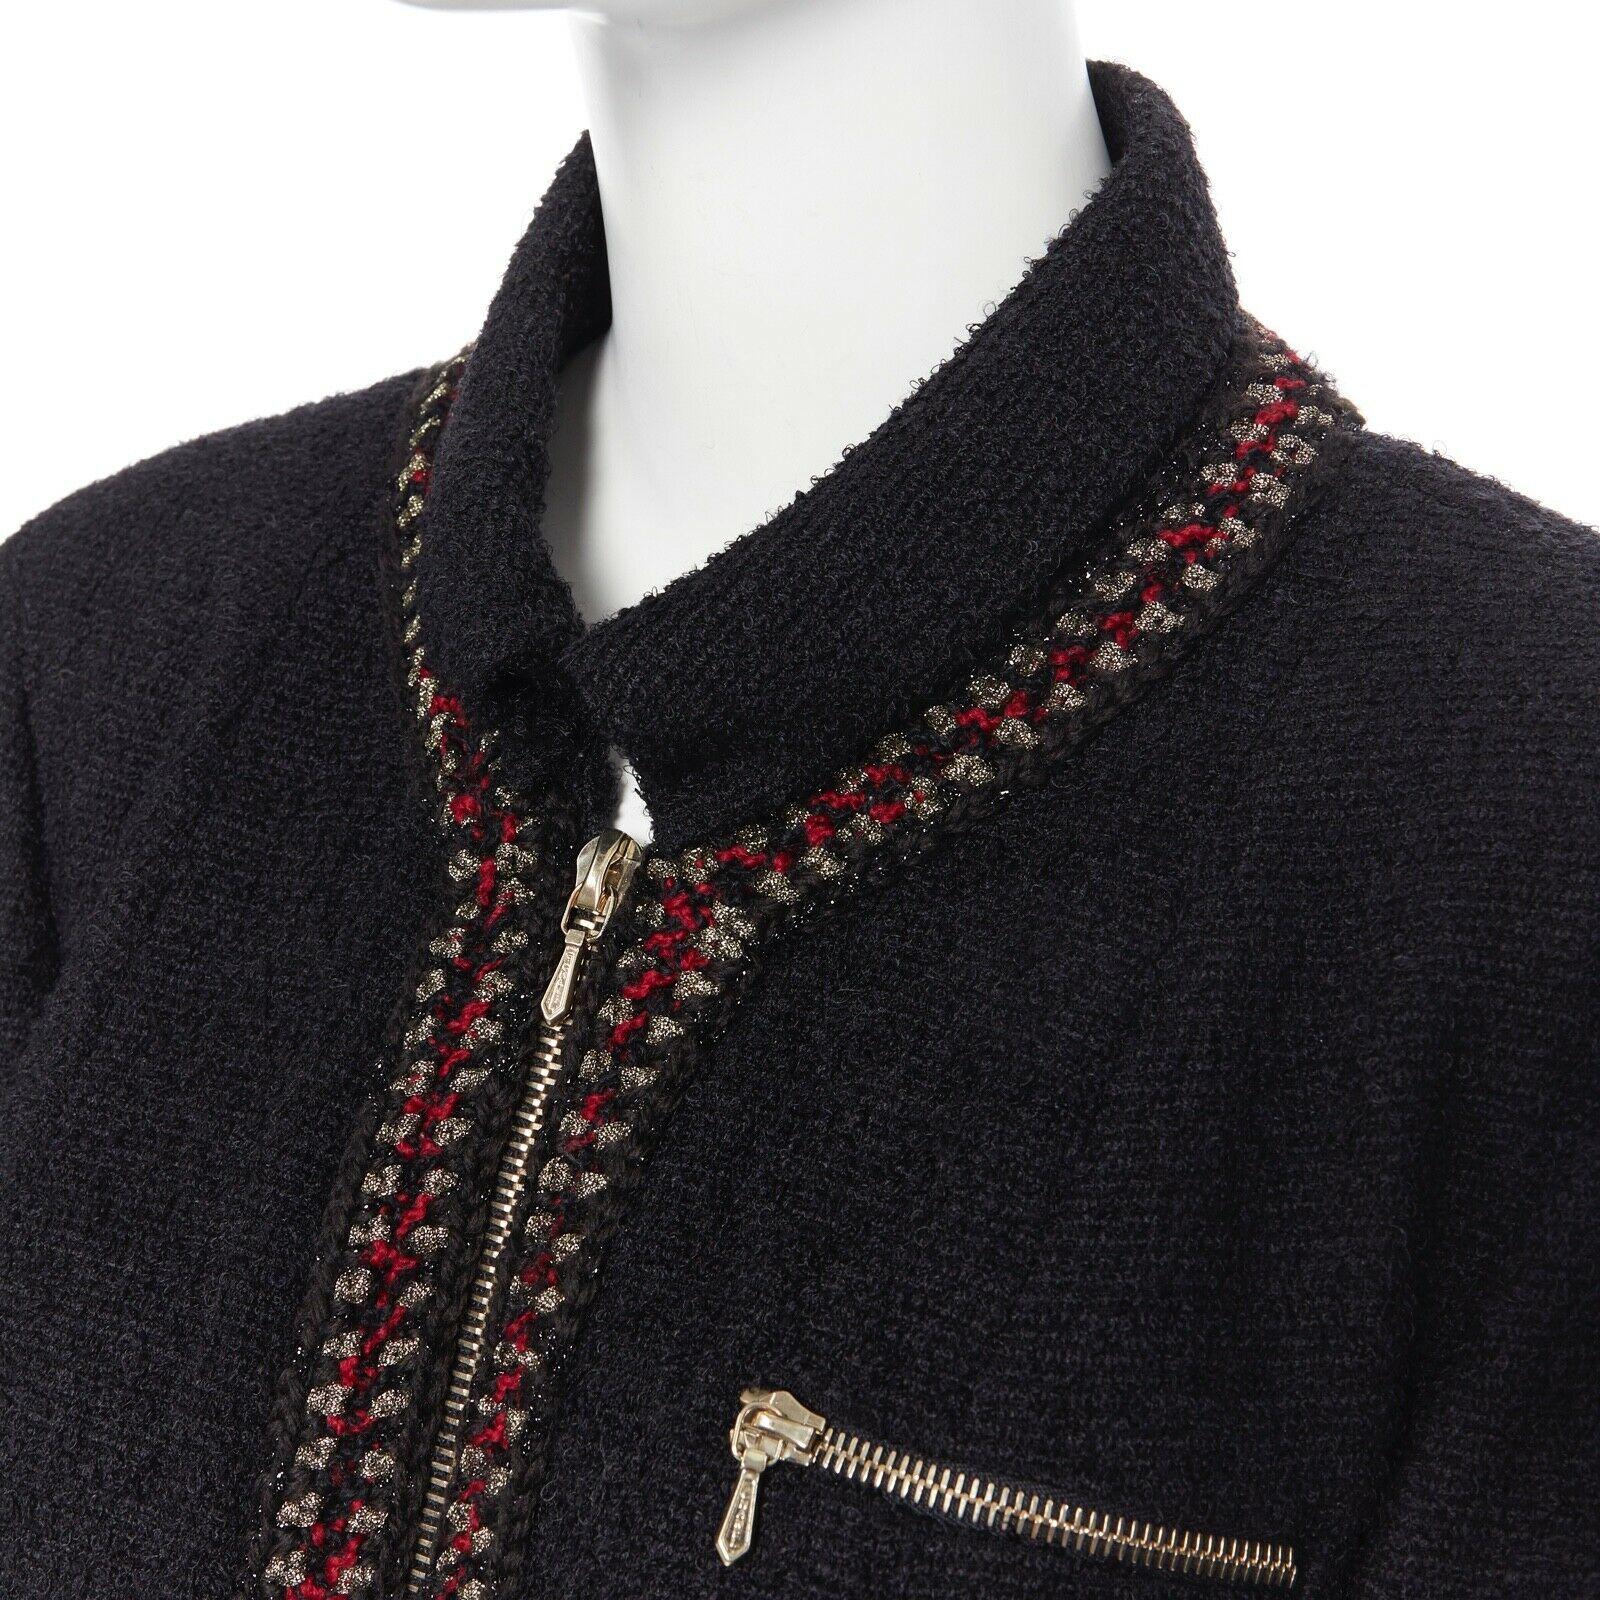 runway CHANEL 10A Paris-Shanghai black tweed red gold crochet trim jacket FR48
Brand: CHANEL
Designer: Karl Lagerfeld
Collection: 10A Paris-Shanghai Metier D'art 
Model Name / Style: Tweed jacket
Material: Wool blend
Color: Black
Pattern: Solid with